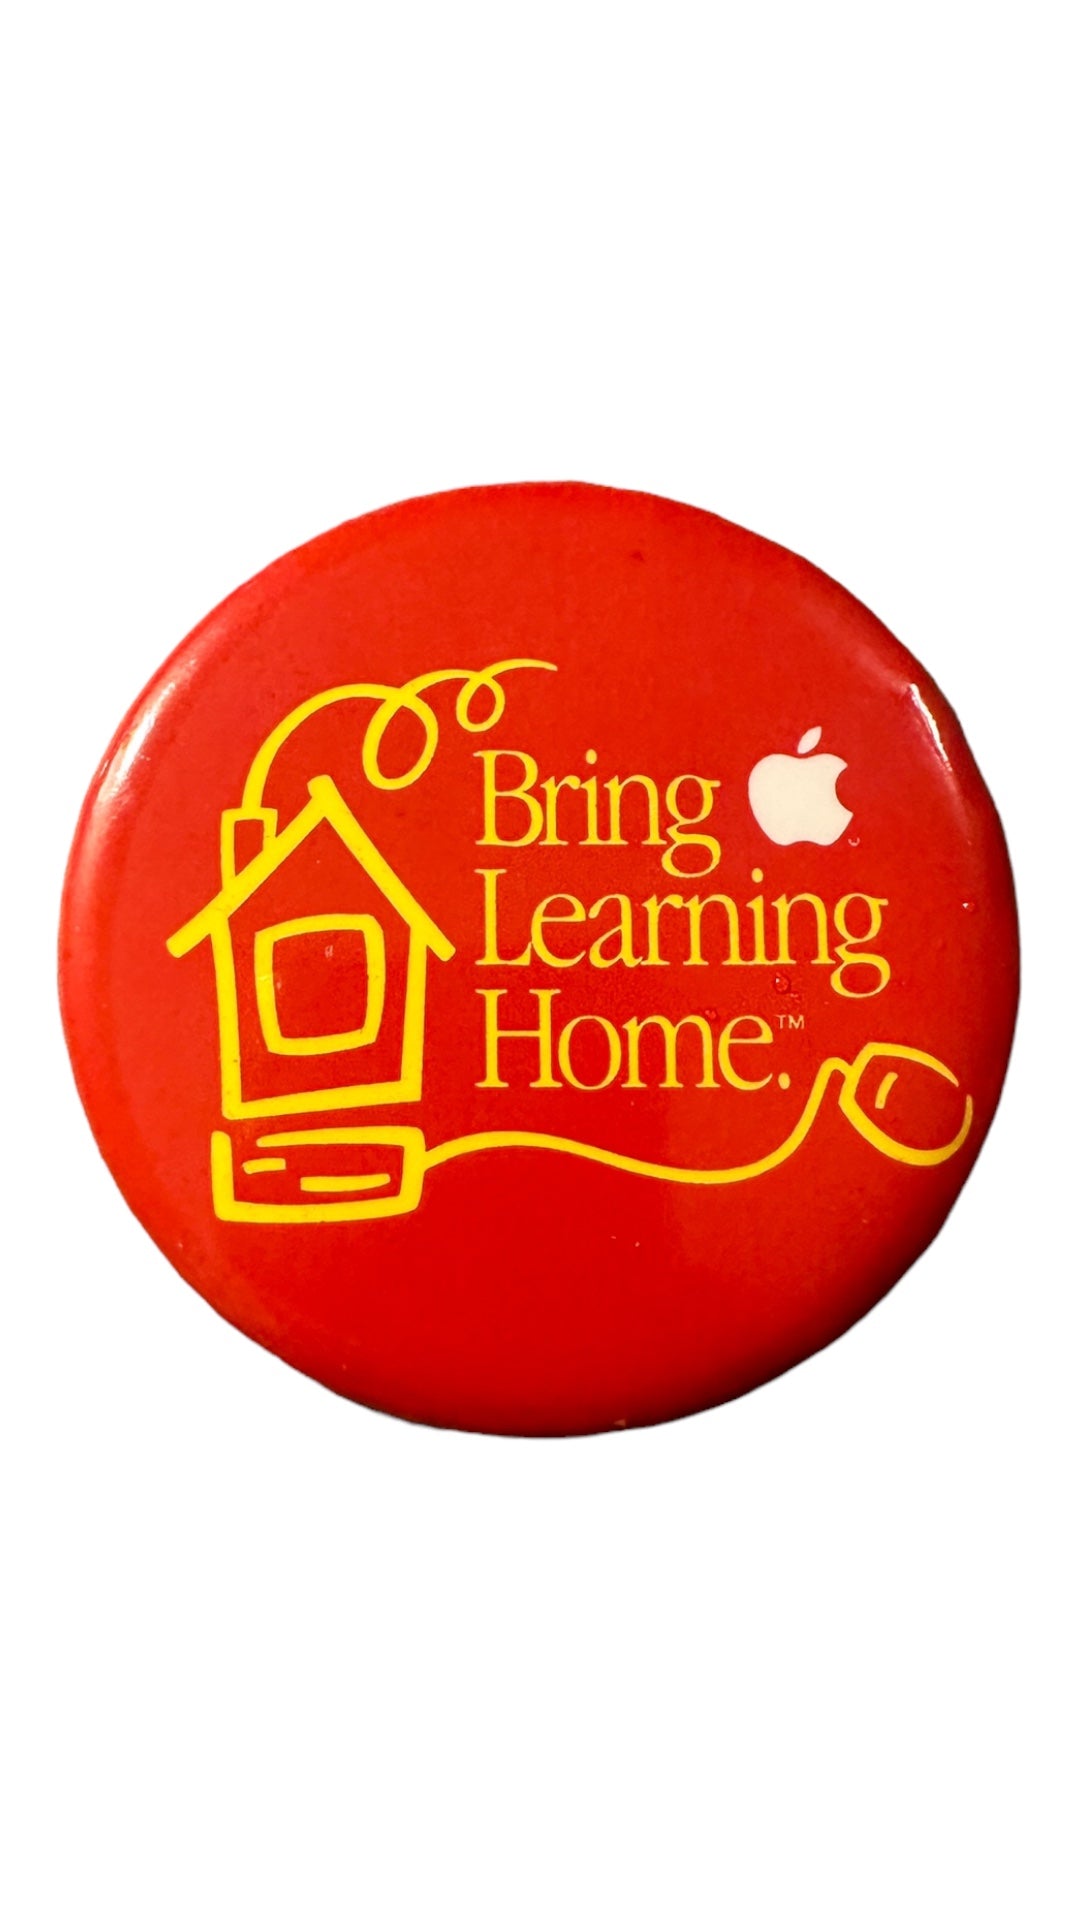 VTG Apple Imac Bring Learning Home Button